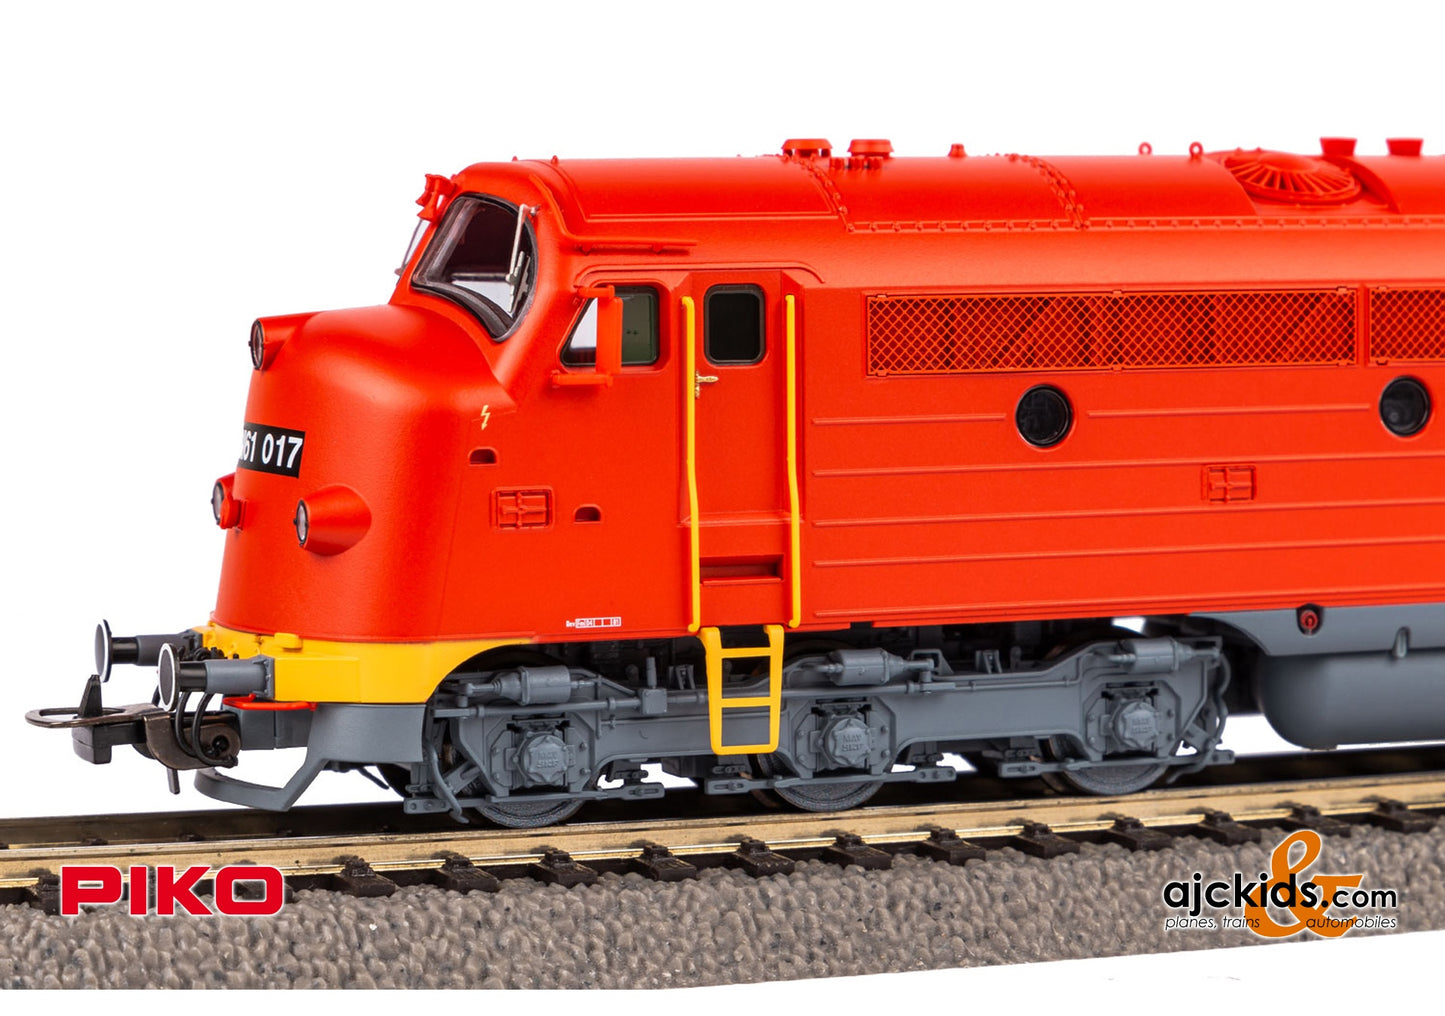 Piko 52482 - M61 Diesel Locomotive MAV IV Sound